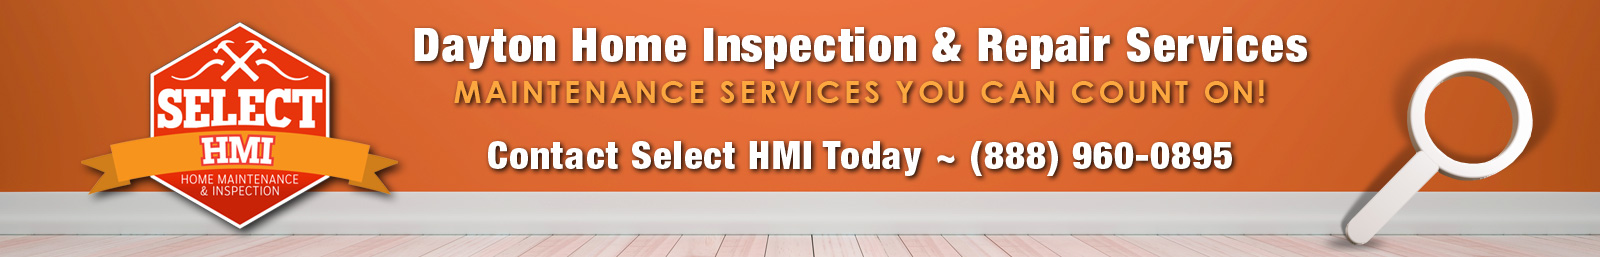 Dayton Home Inspection & Repair